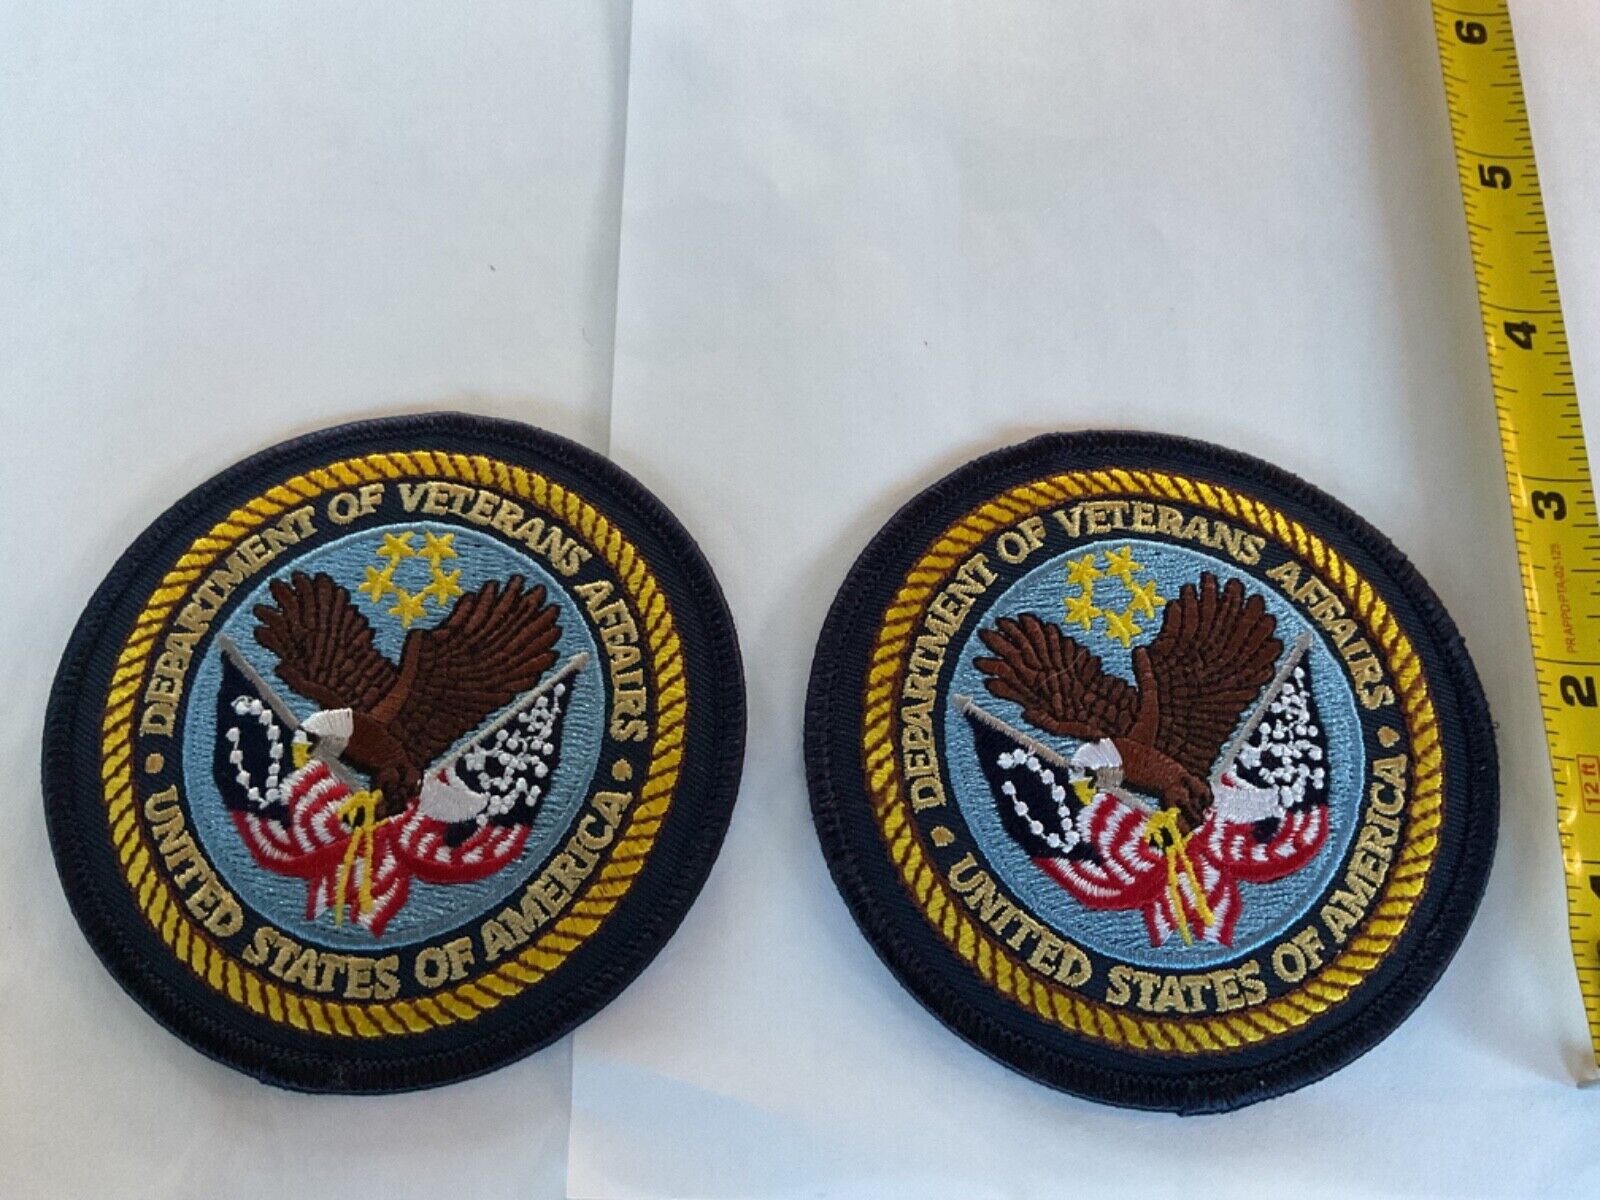 Department Of Veterans Affairs Hat,vest,jacket size collectible patch 2 pieces